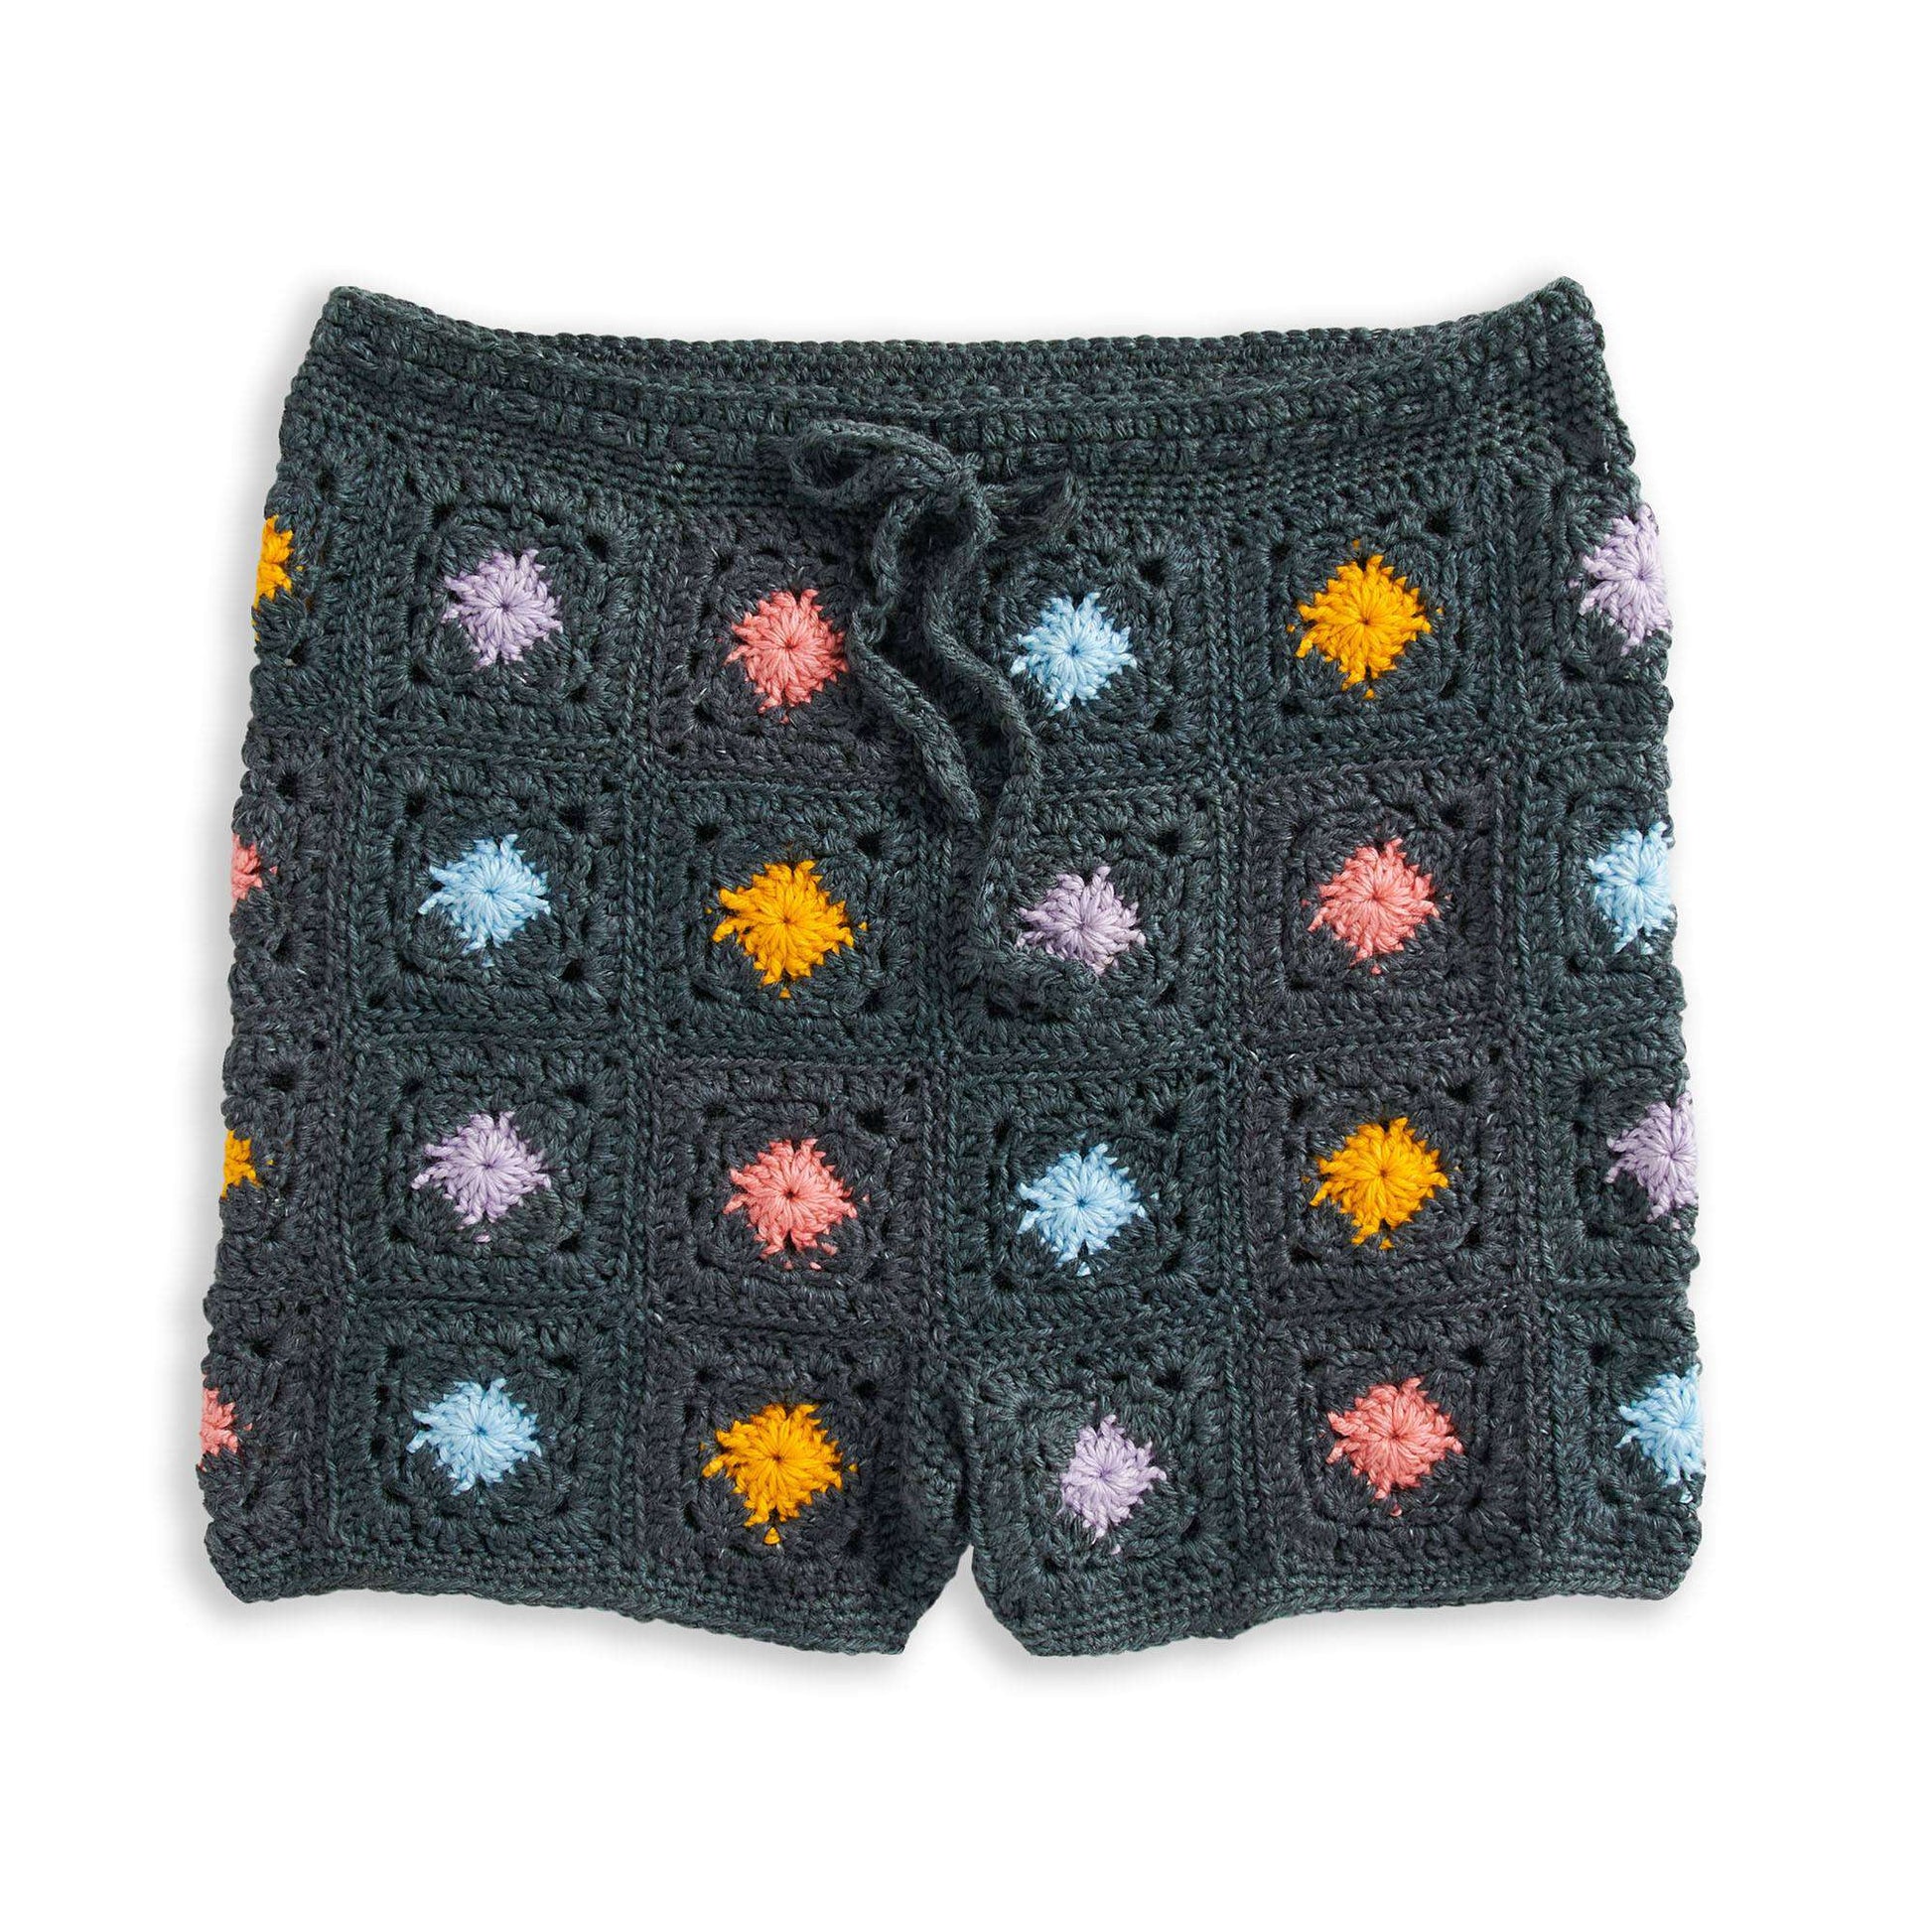 Free Caron Granny Crochet Shorts Pattern